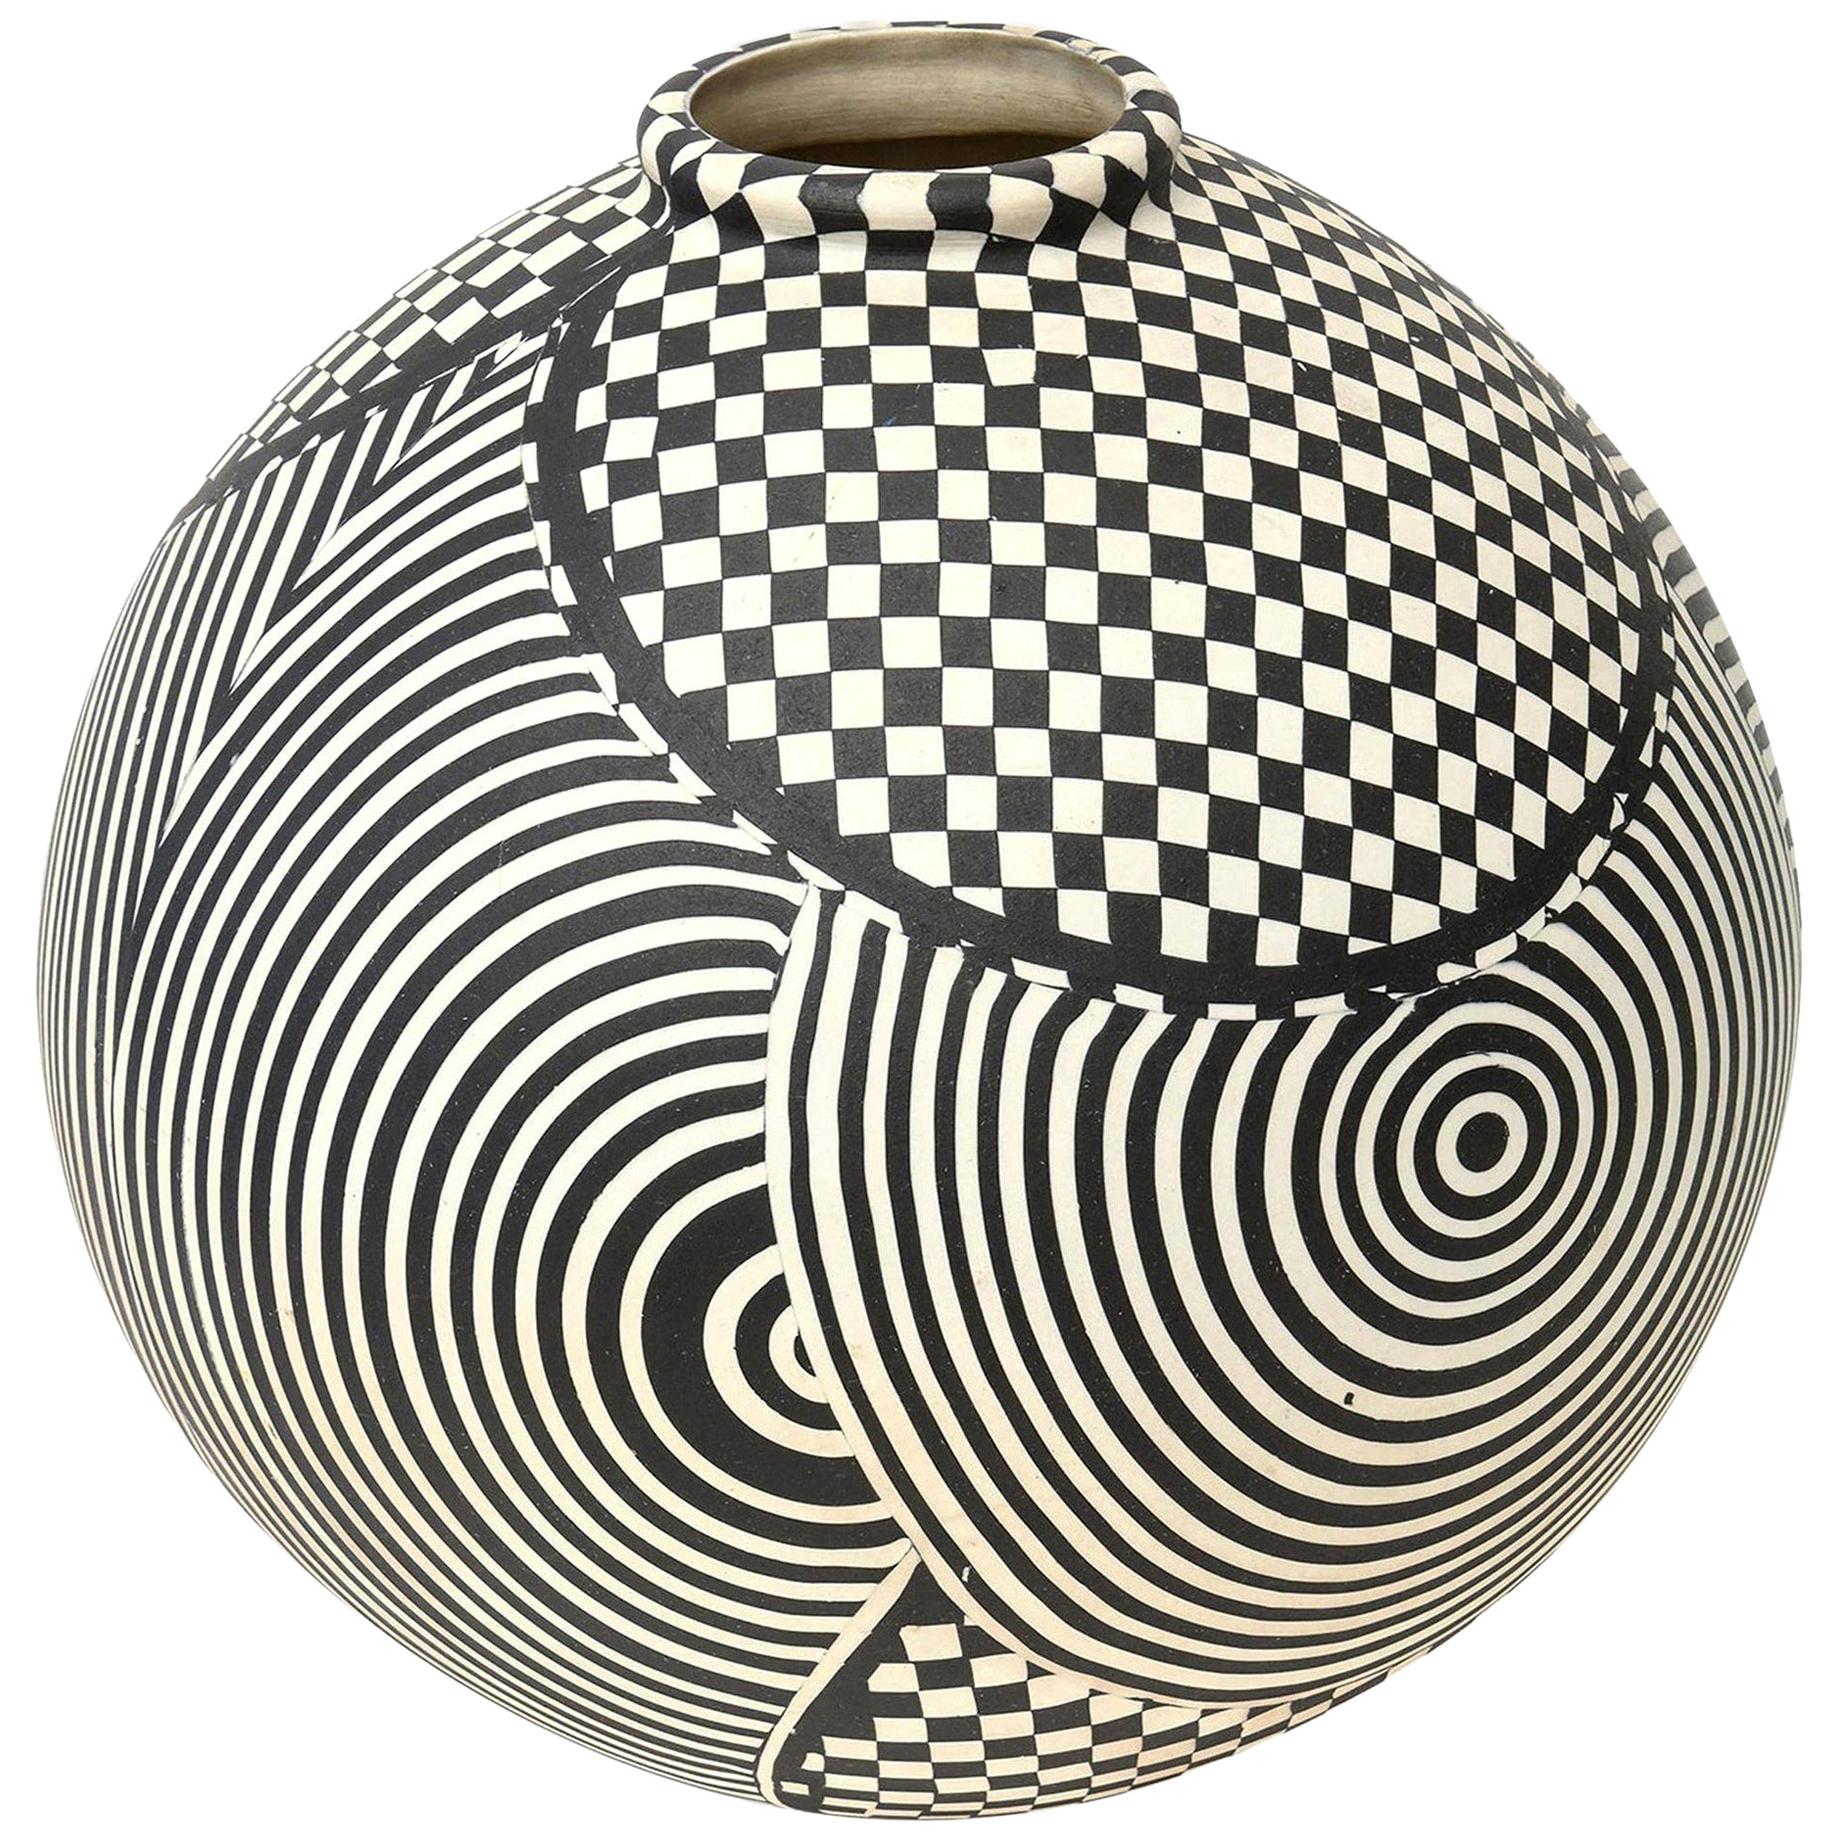 Geometric Studio Ceramic Op Art Sculpture Bowl Vessel Vintage